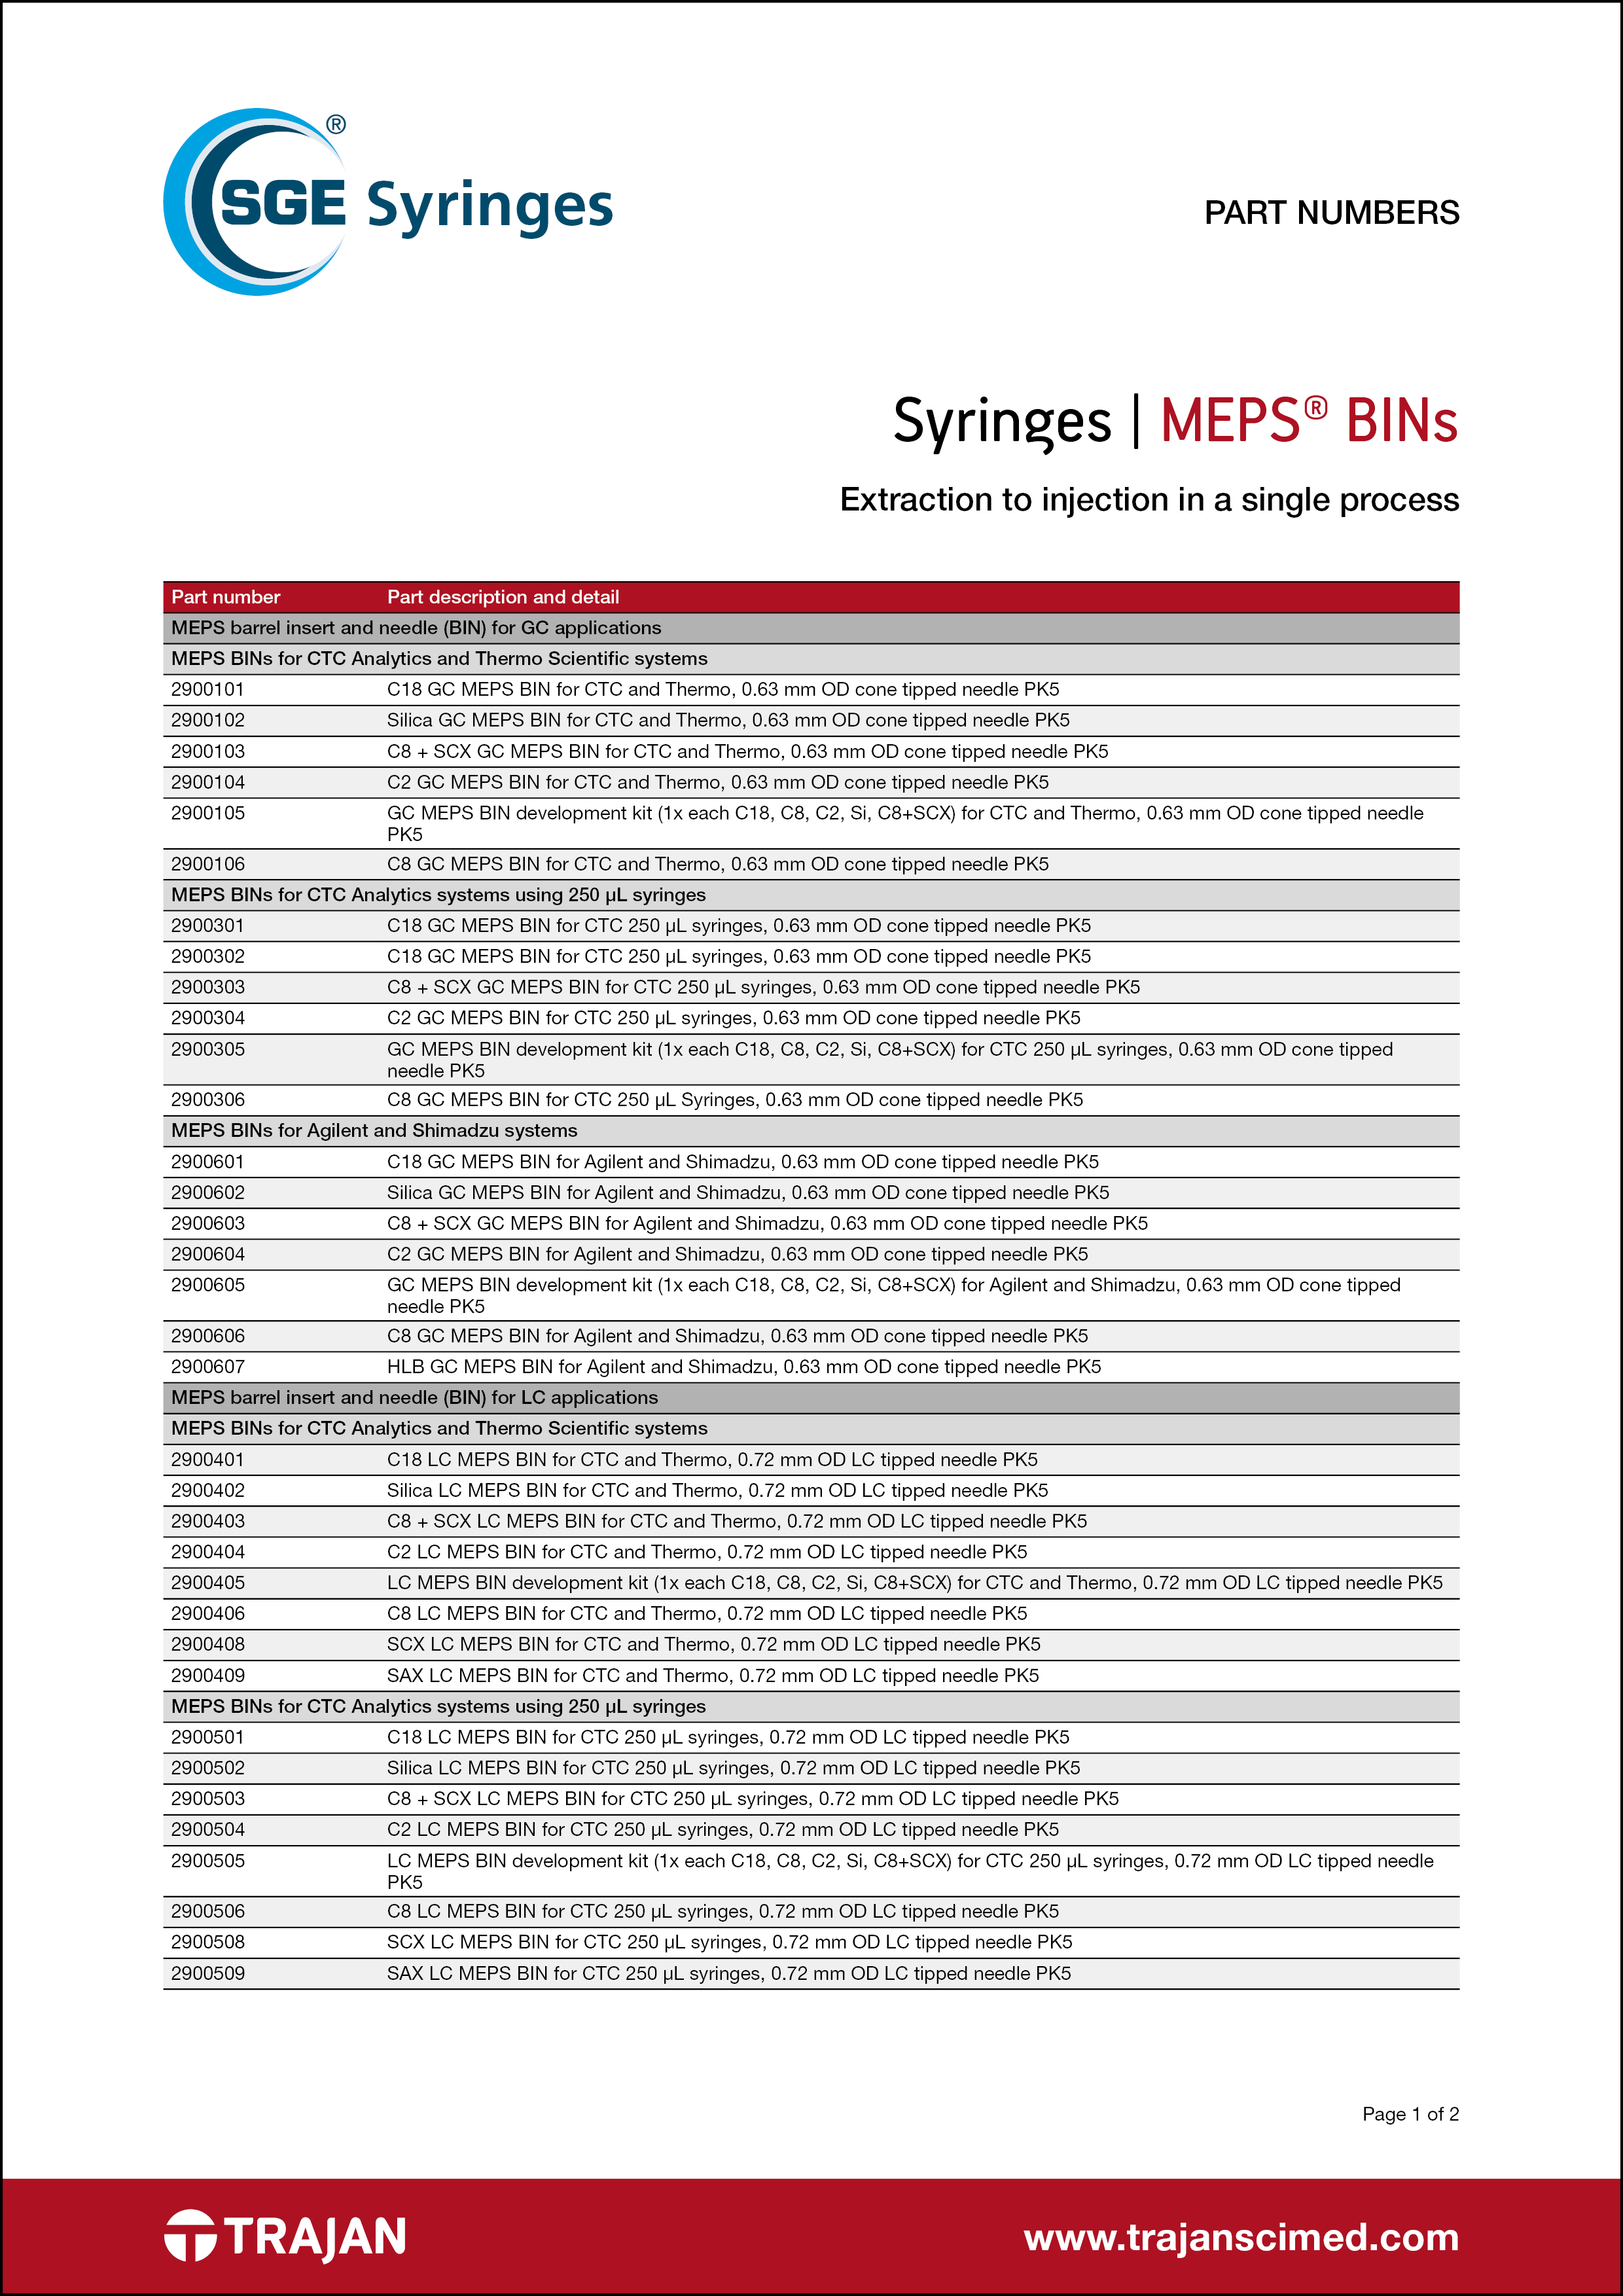 Part Number List - MEPS® BINs